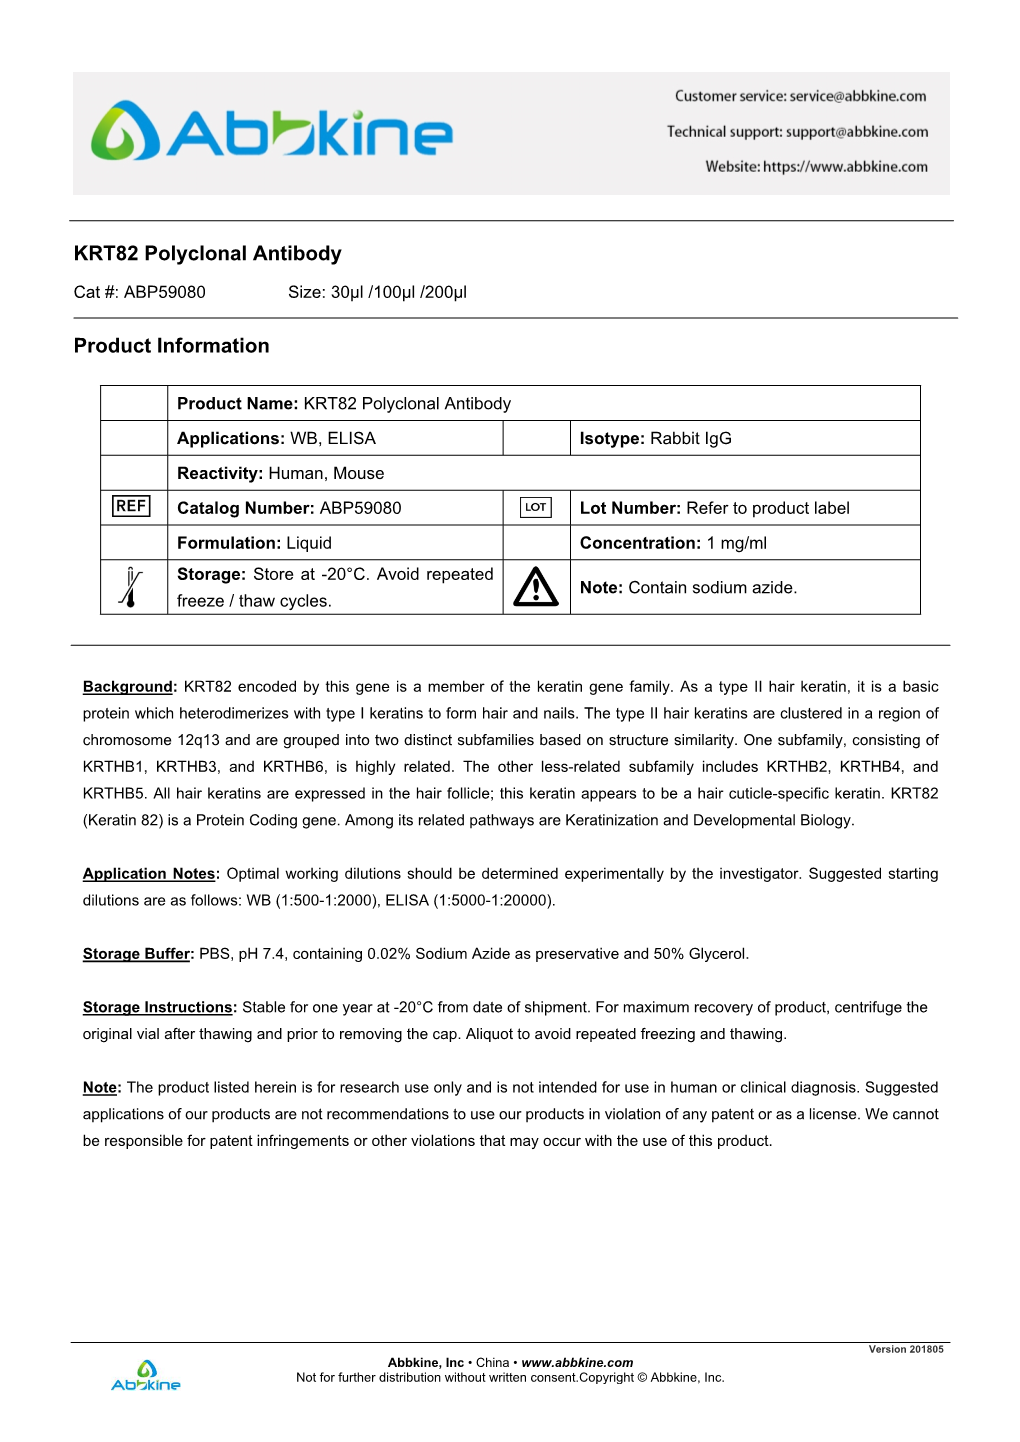 KRT82 Polyclonal Antibody Product Information